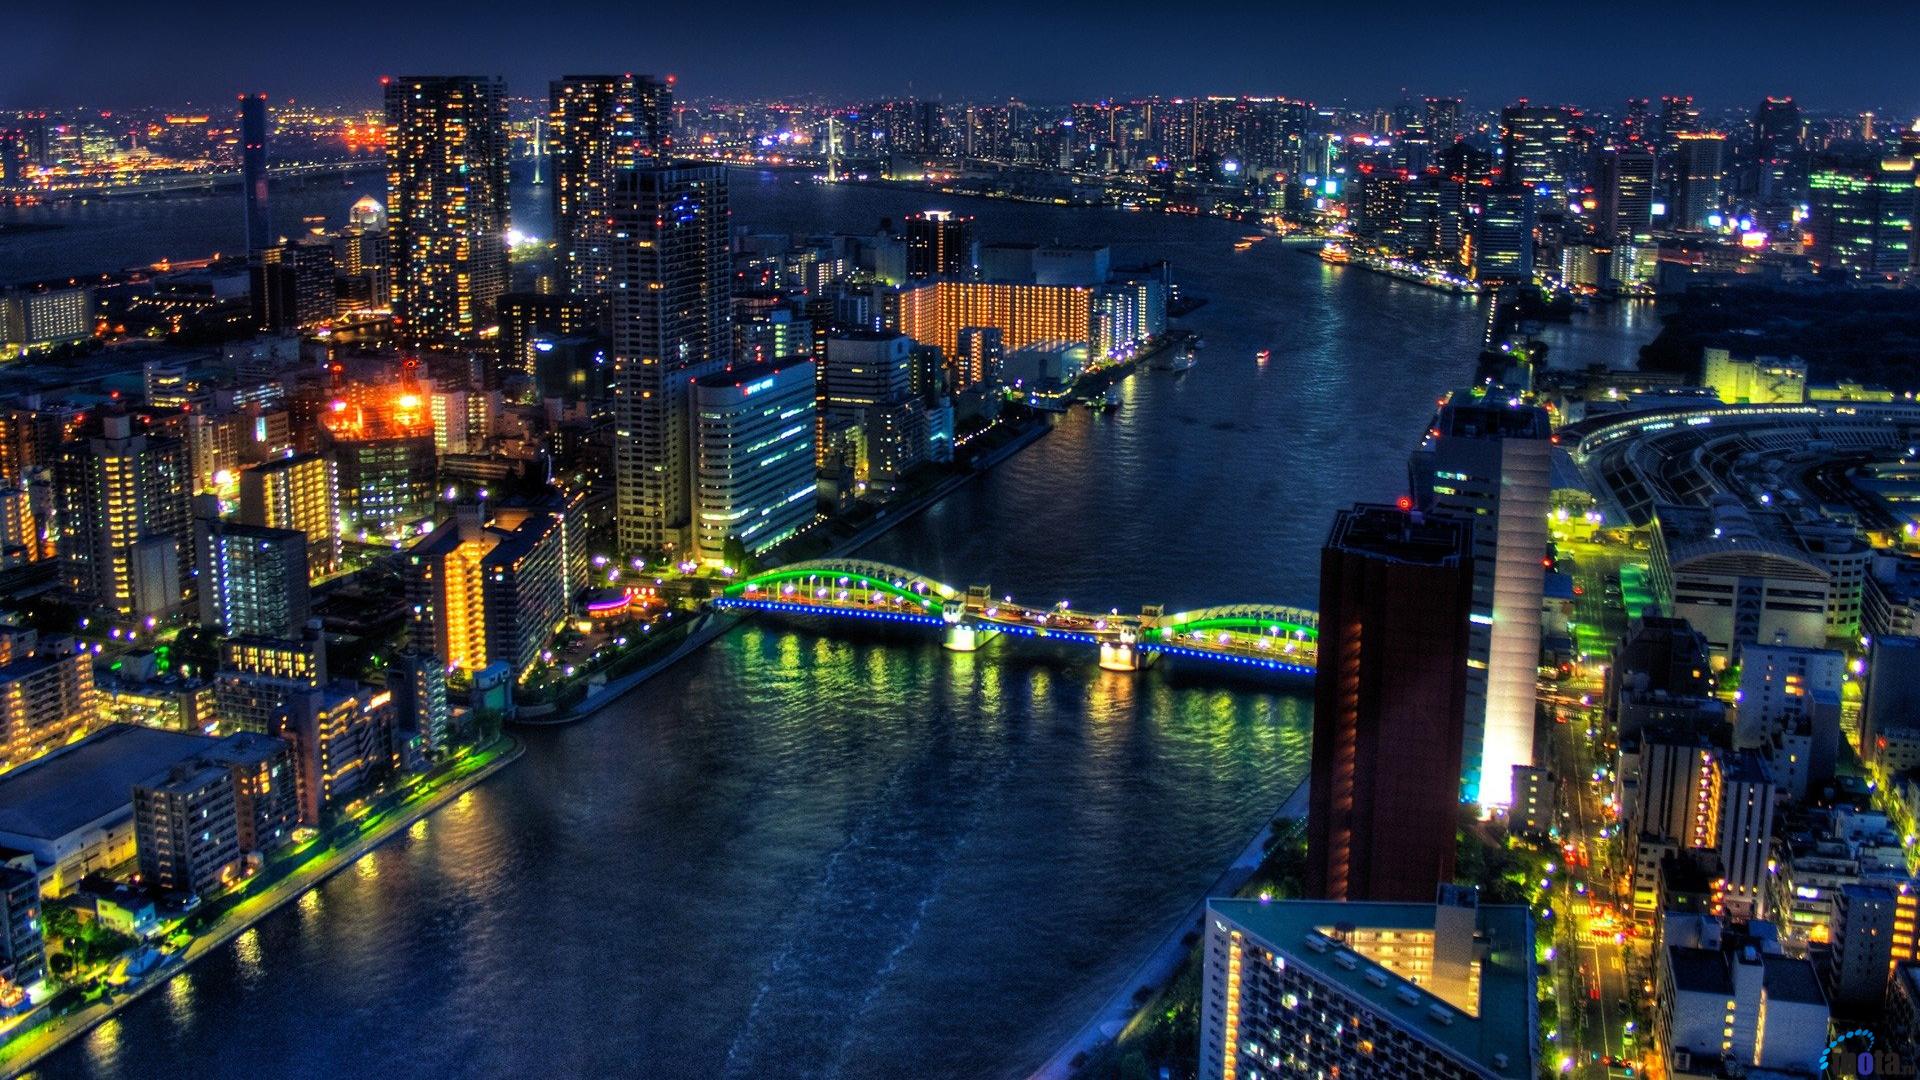 Download Wallpaper Bridge in Tokyo by night 1920 x 1080 HDTV 1080p